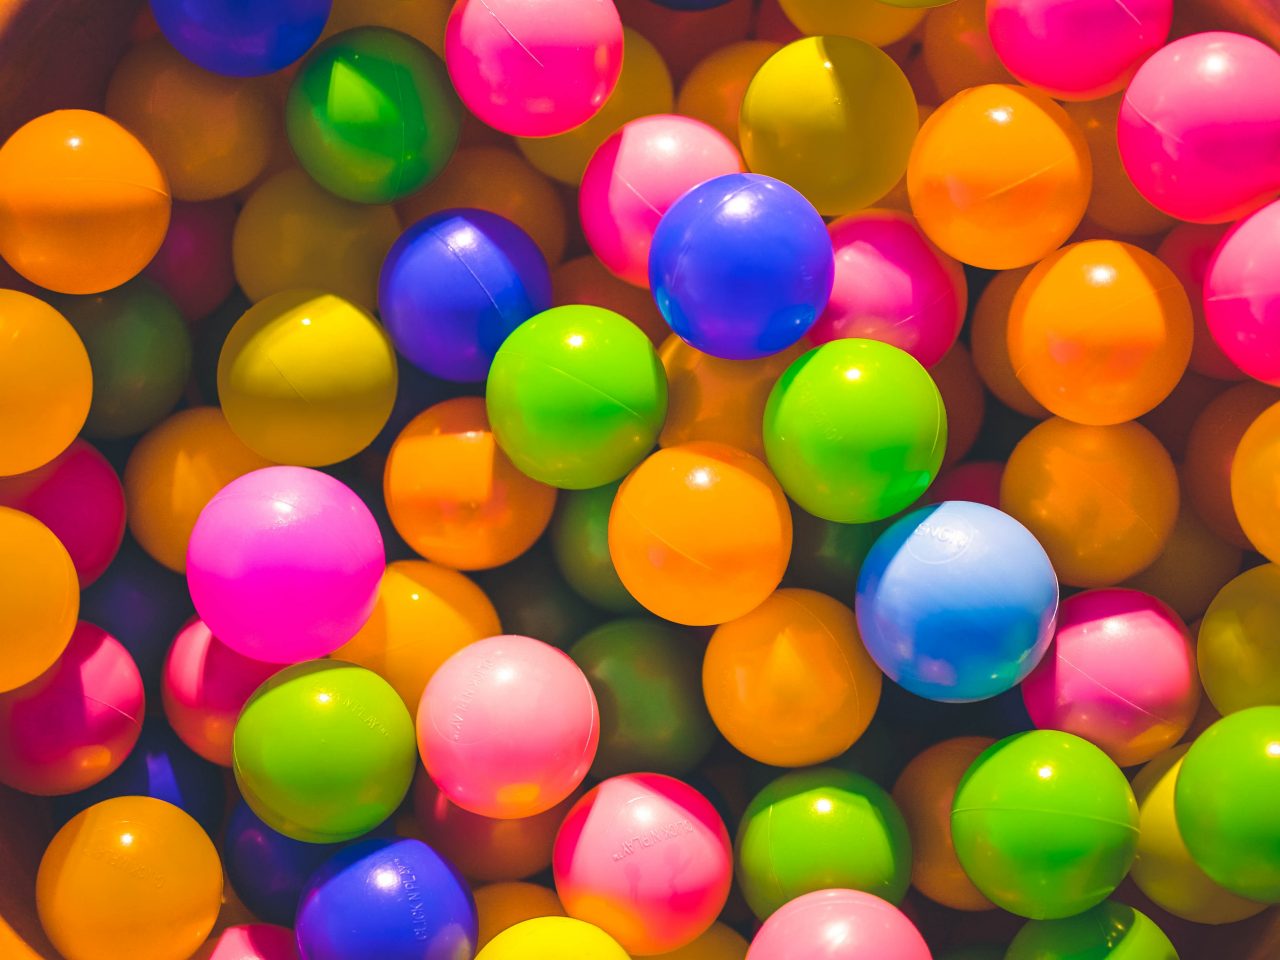 Small bright-coloured balls in a ball pit 